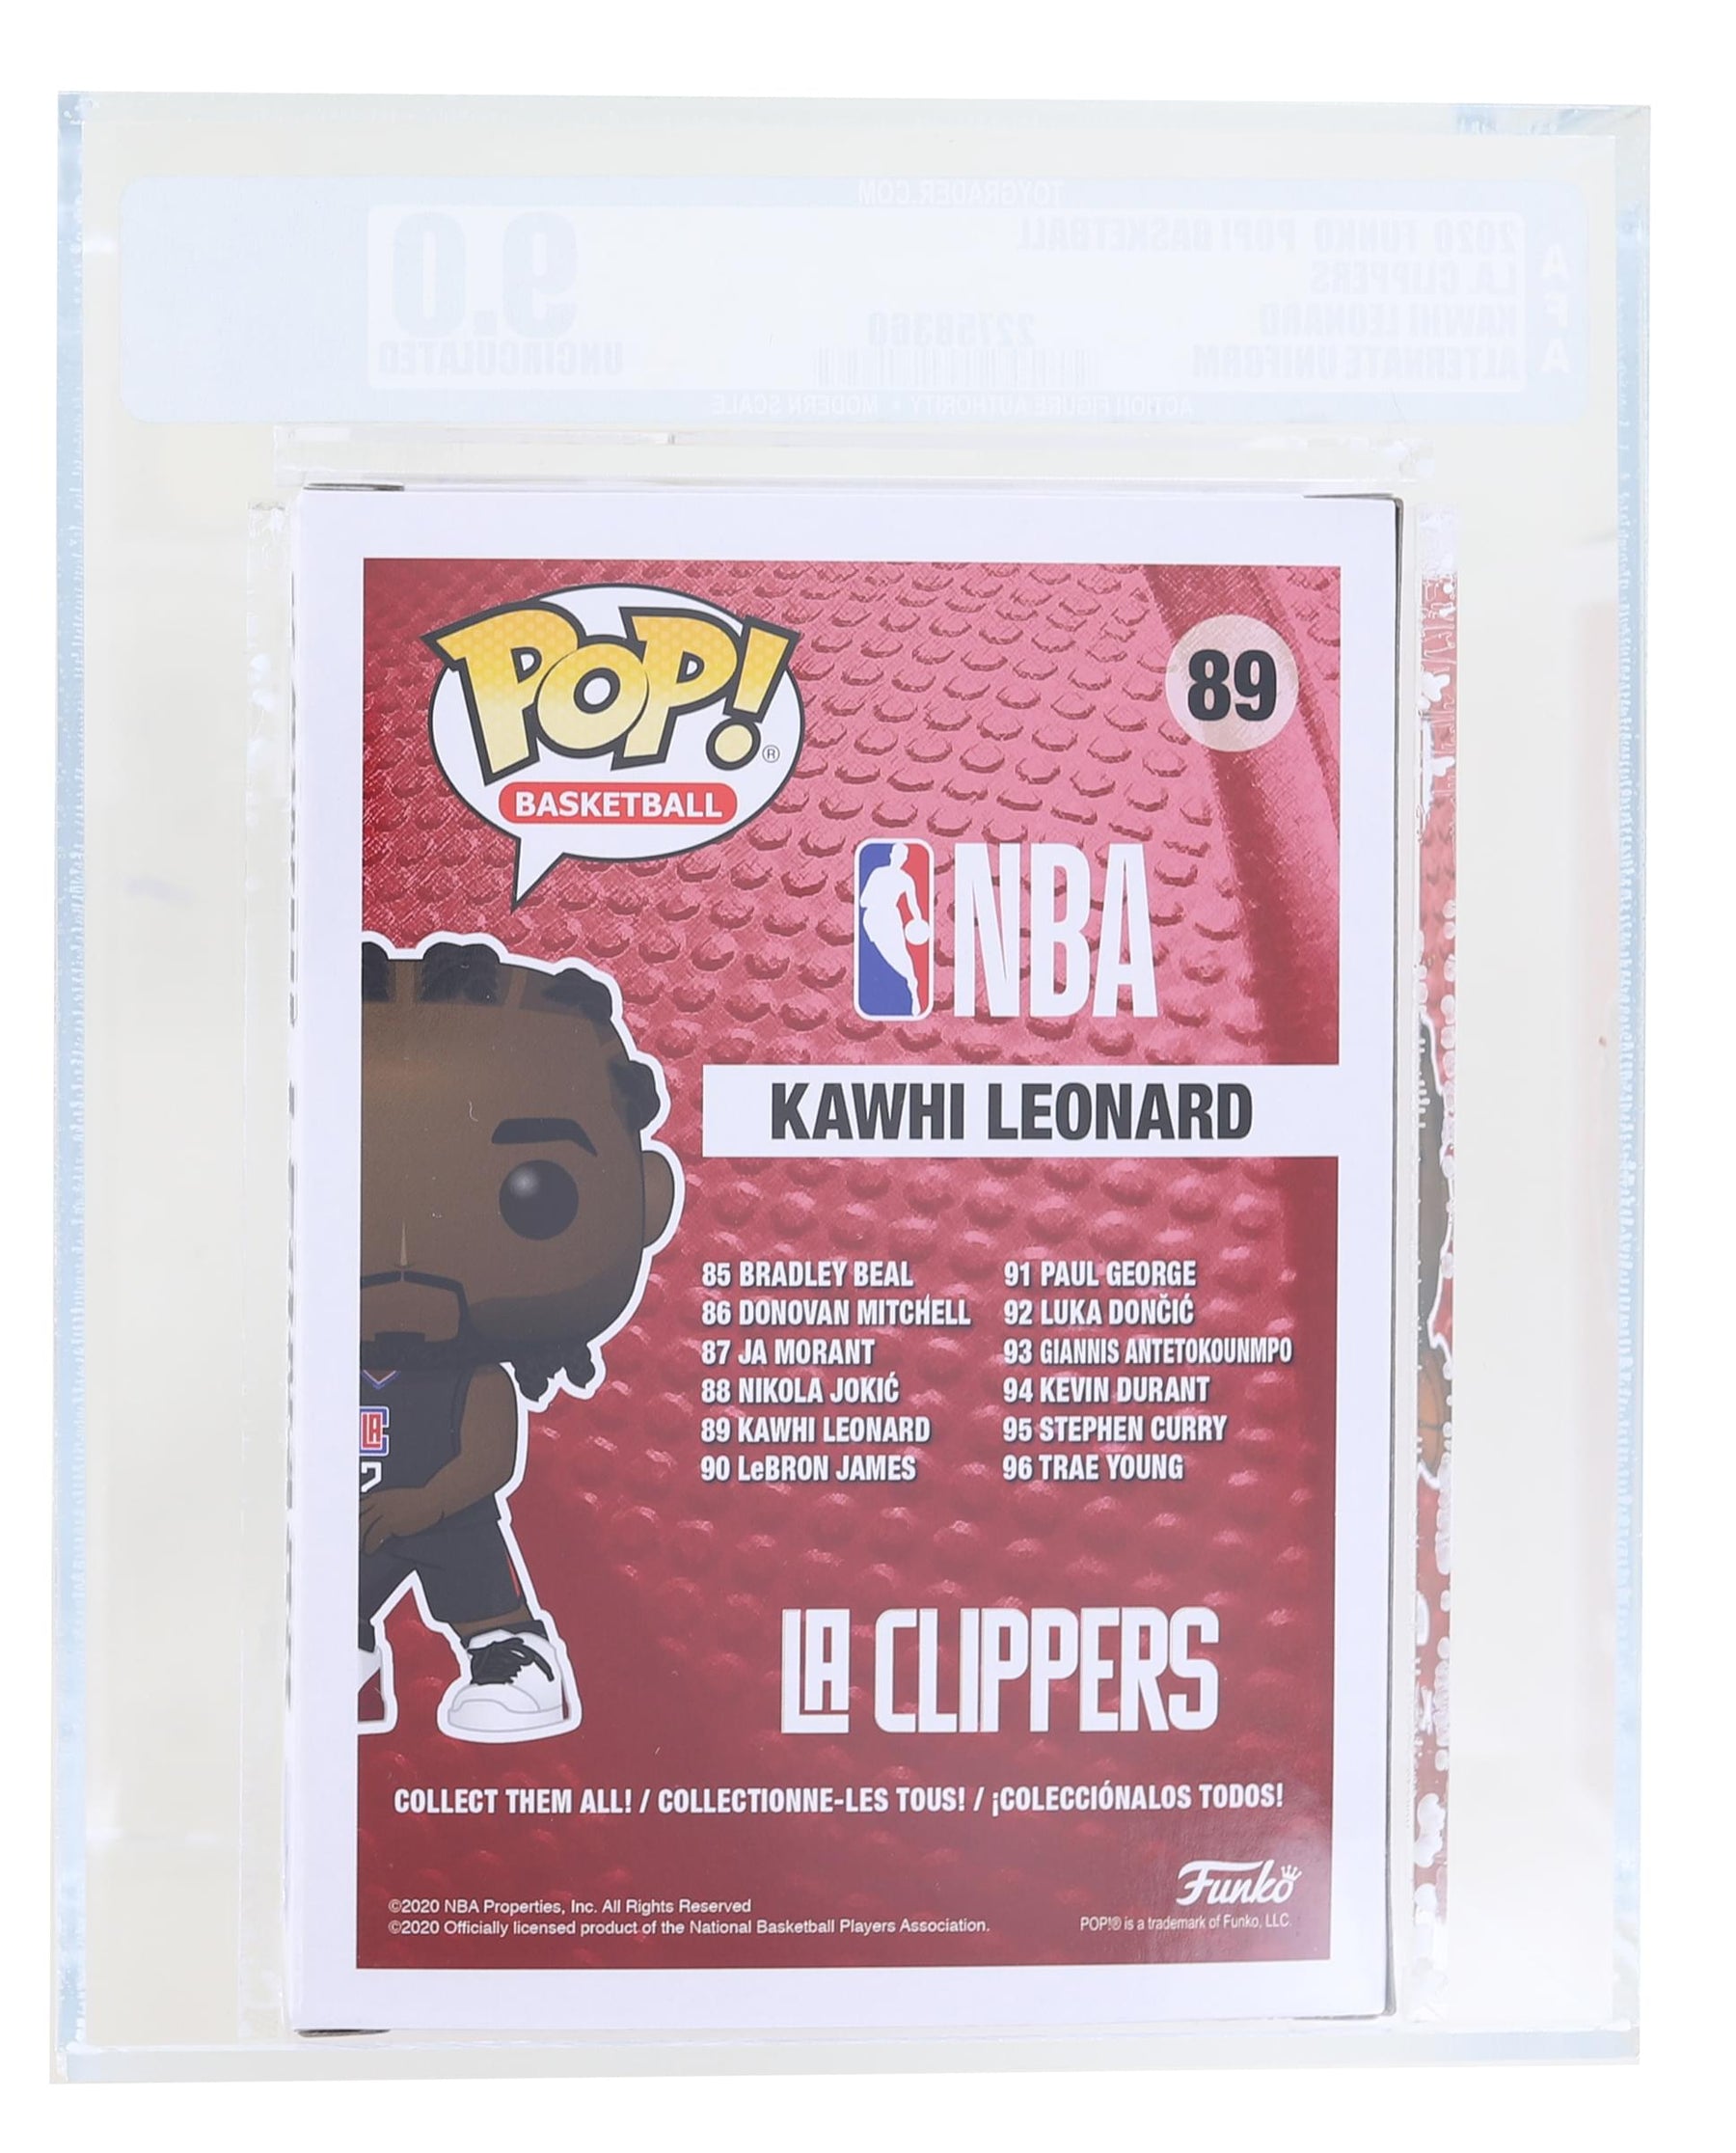 LA Clippers NBA Funko POP Vinyl Figure | Kawhi Leonard (Alternate) Graded AFA 9.0